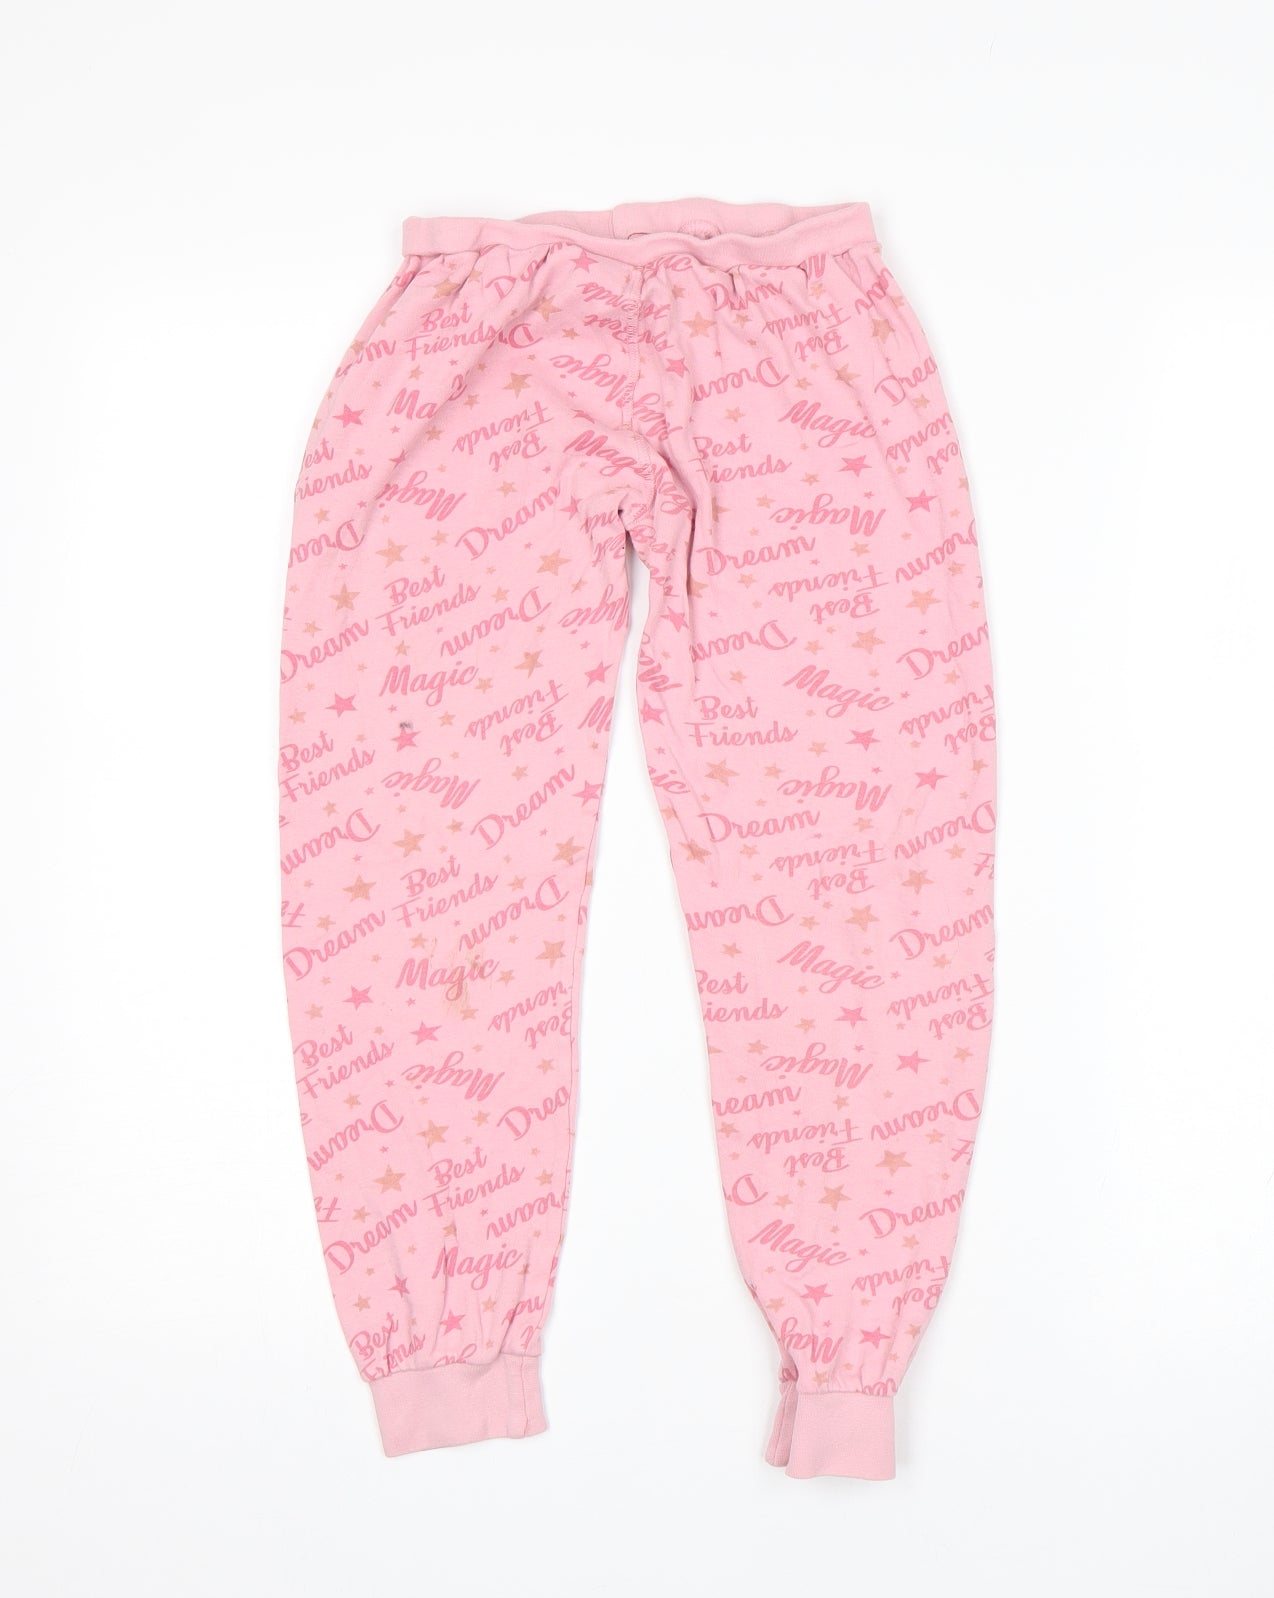 George Girls Pink    Pyjama Pants Size 9-10 Years  - disney